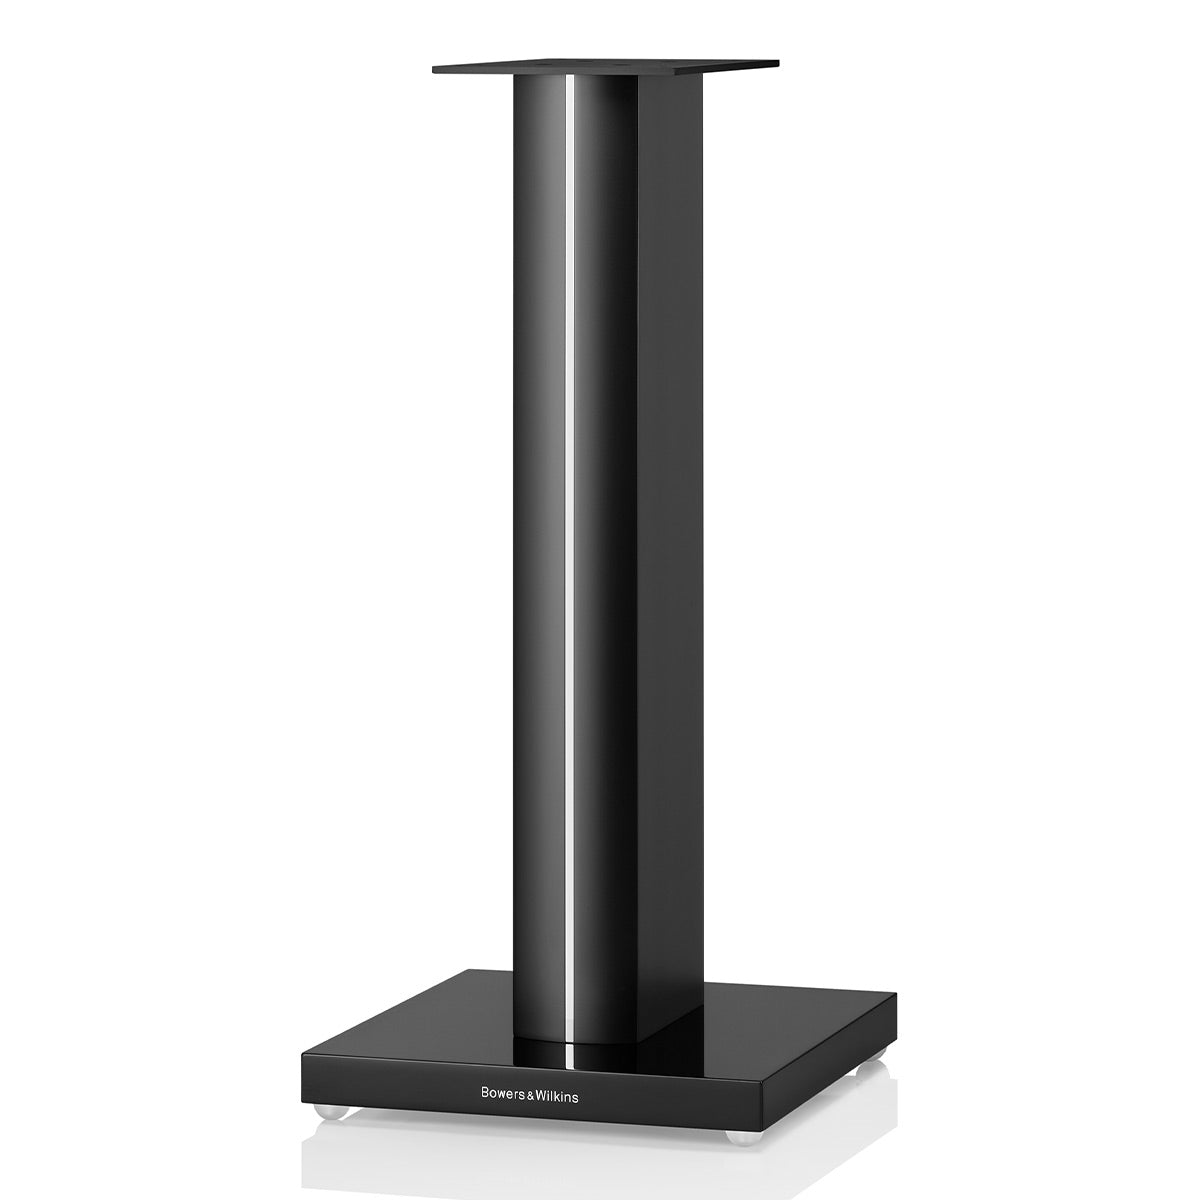 Bowers & Wilkins 706 S3 2-Way Bookshelf Speaker (Mocha) with FS-700 Floor Stand (Black) - Pair